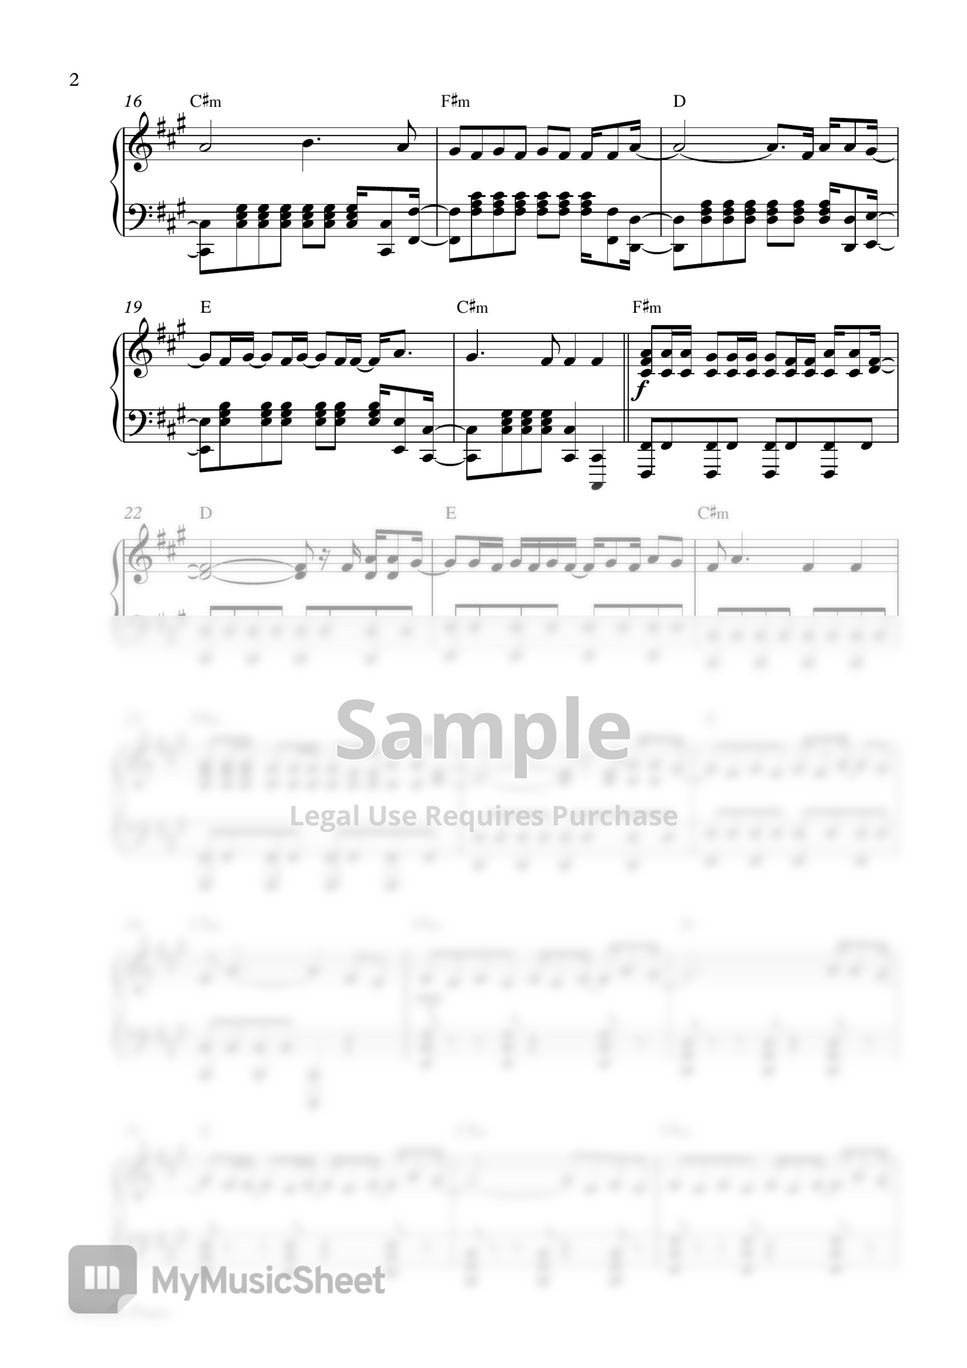 TONES AND I - Dance Monkey (Piano Sheet) by Pianella Piano